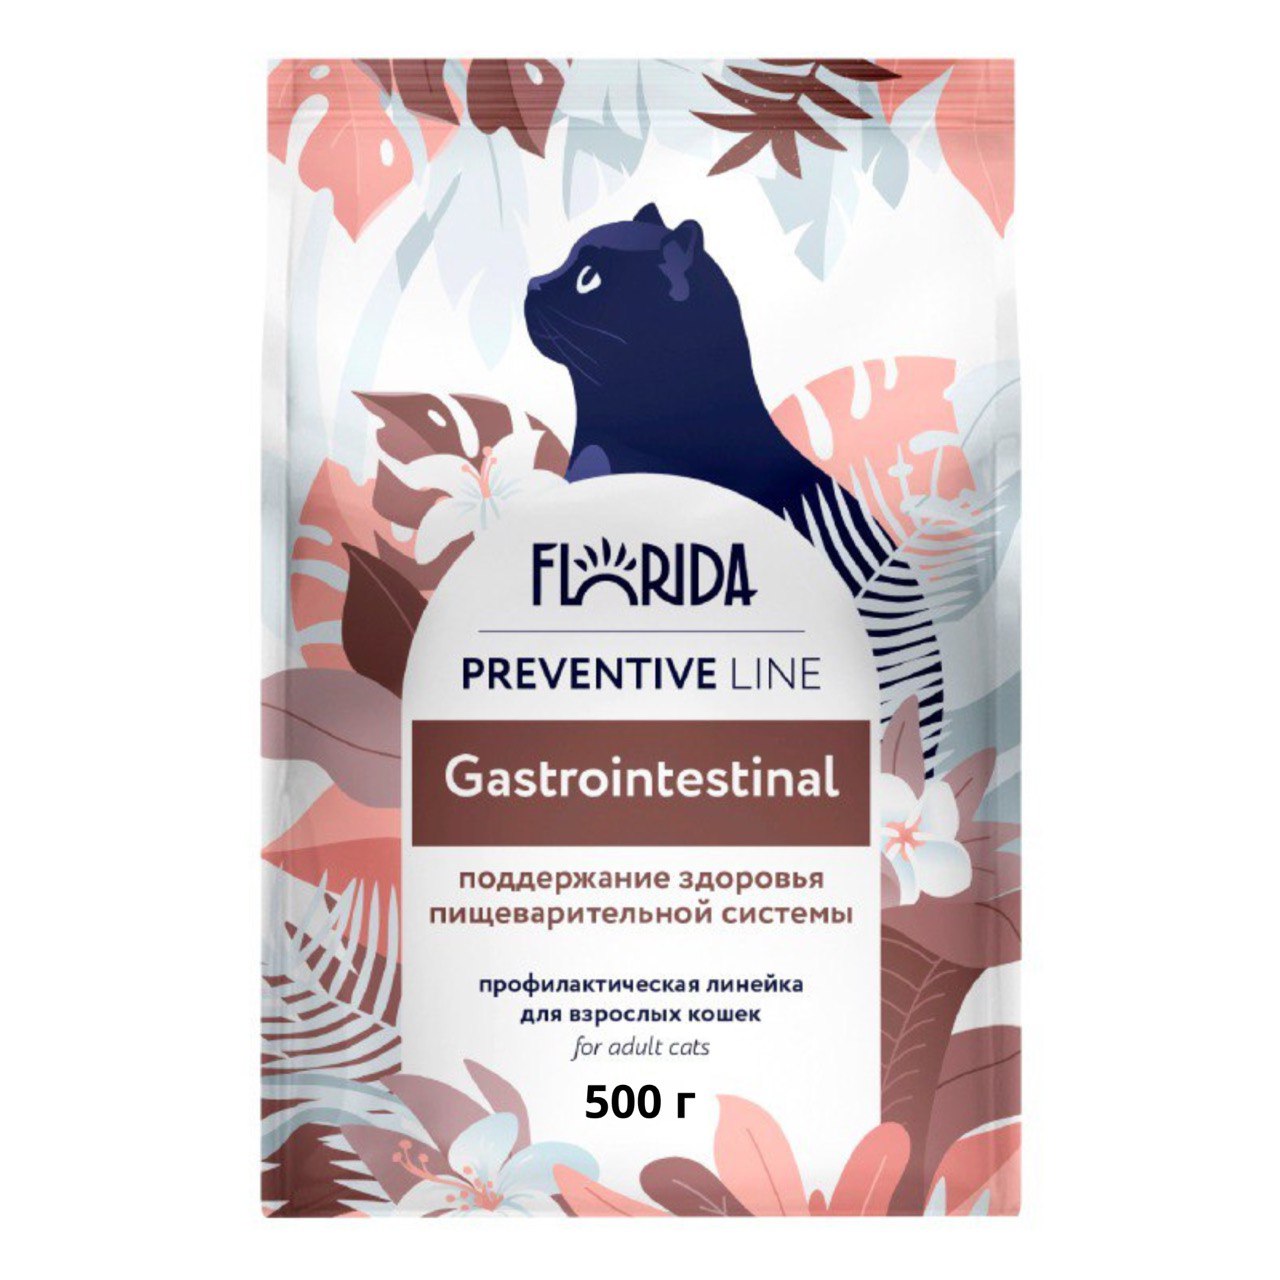 Florida Preventive Line Gastrointestinal д/кош 500 г